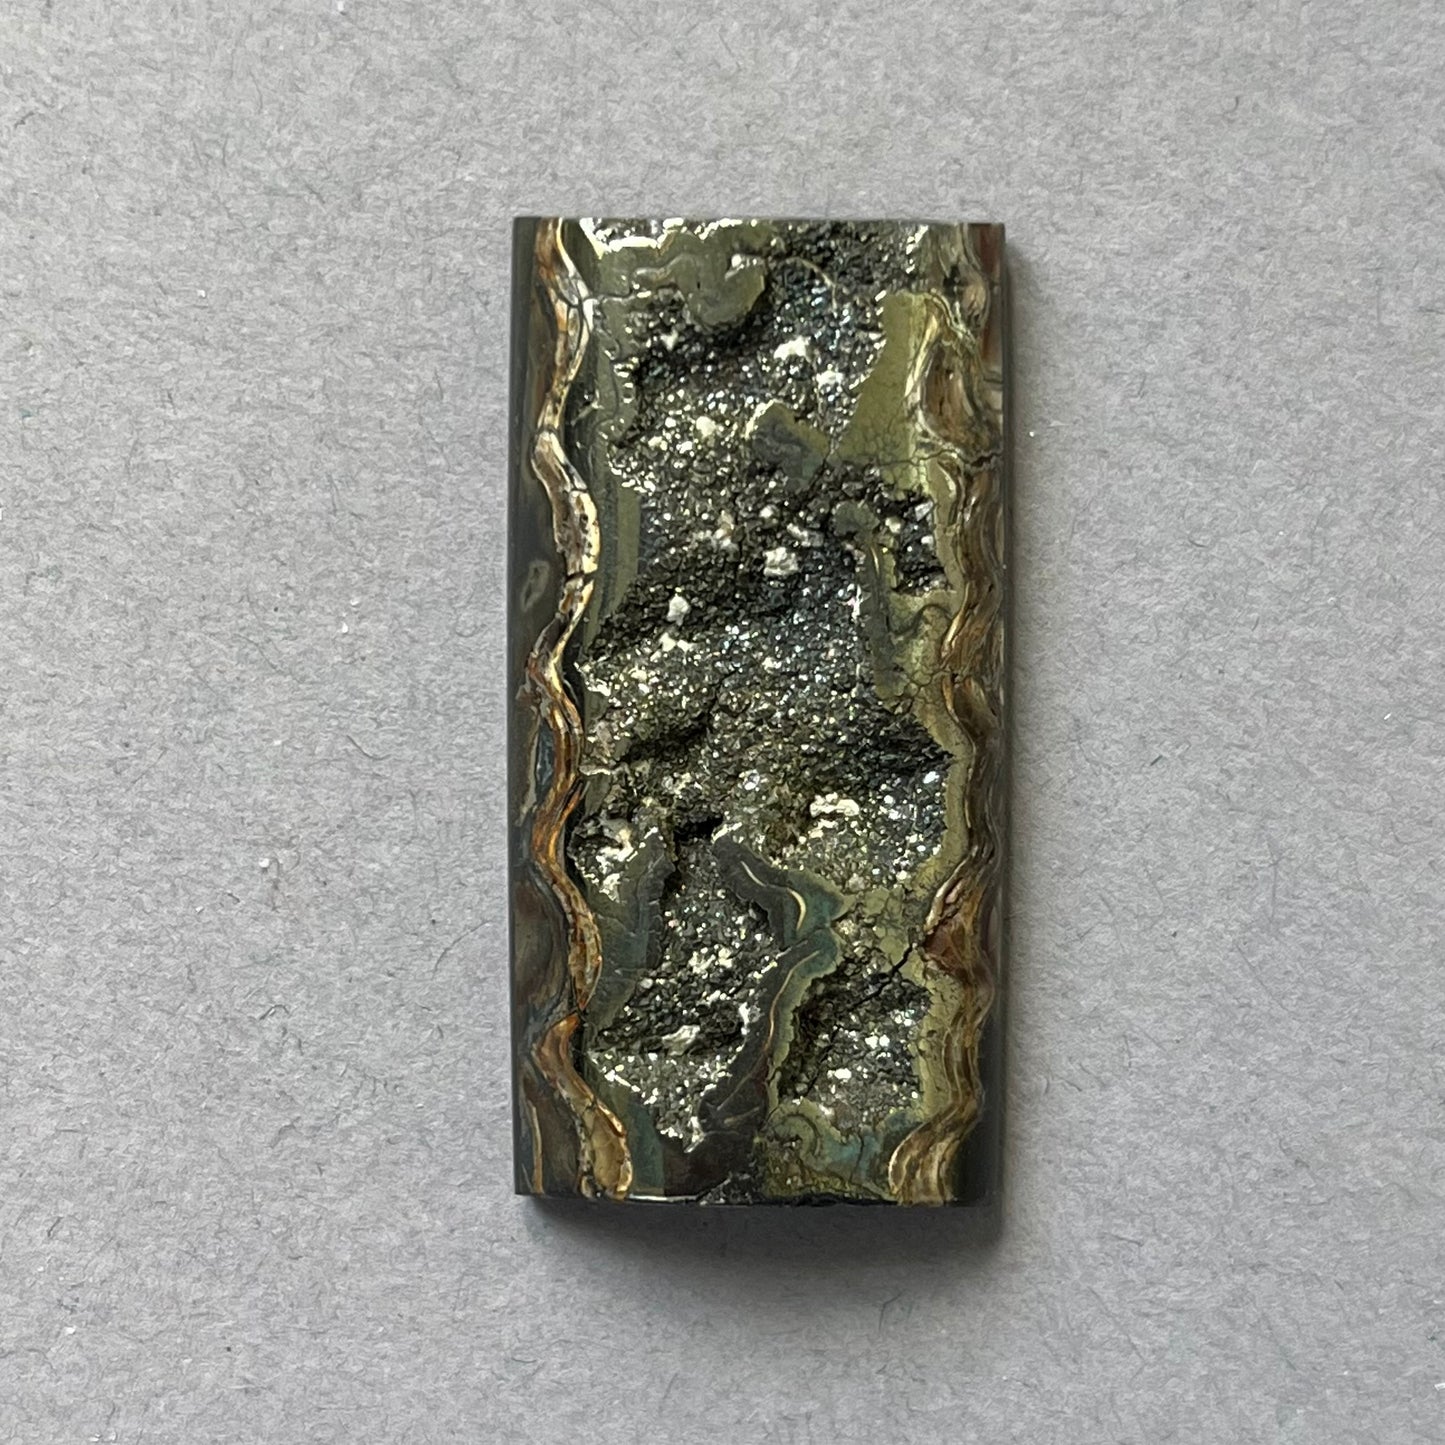 Pyritized ammonite, AM_P261, cabochon cut, 37x19x7 mm